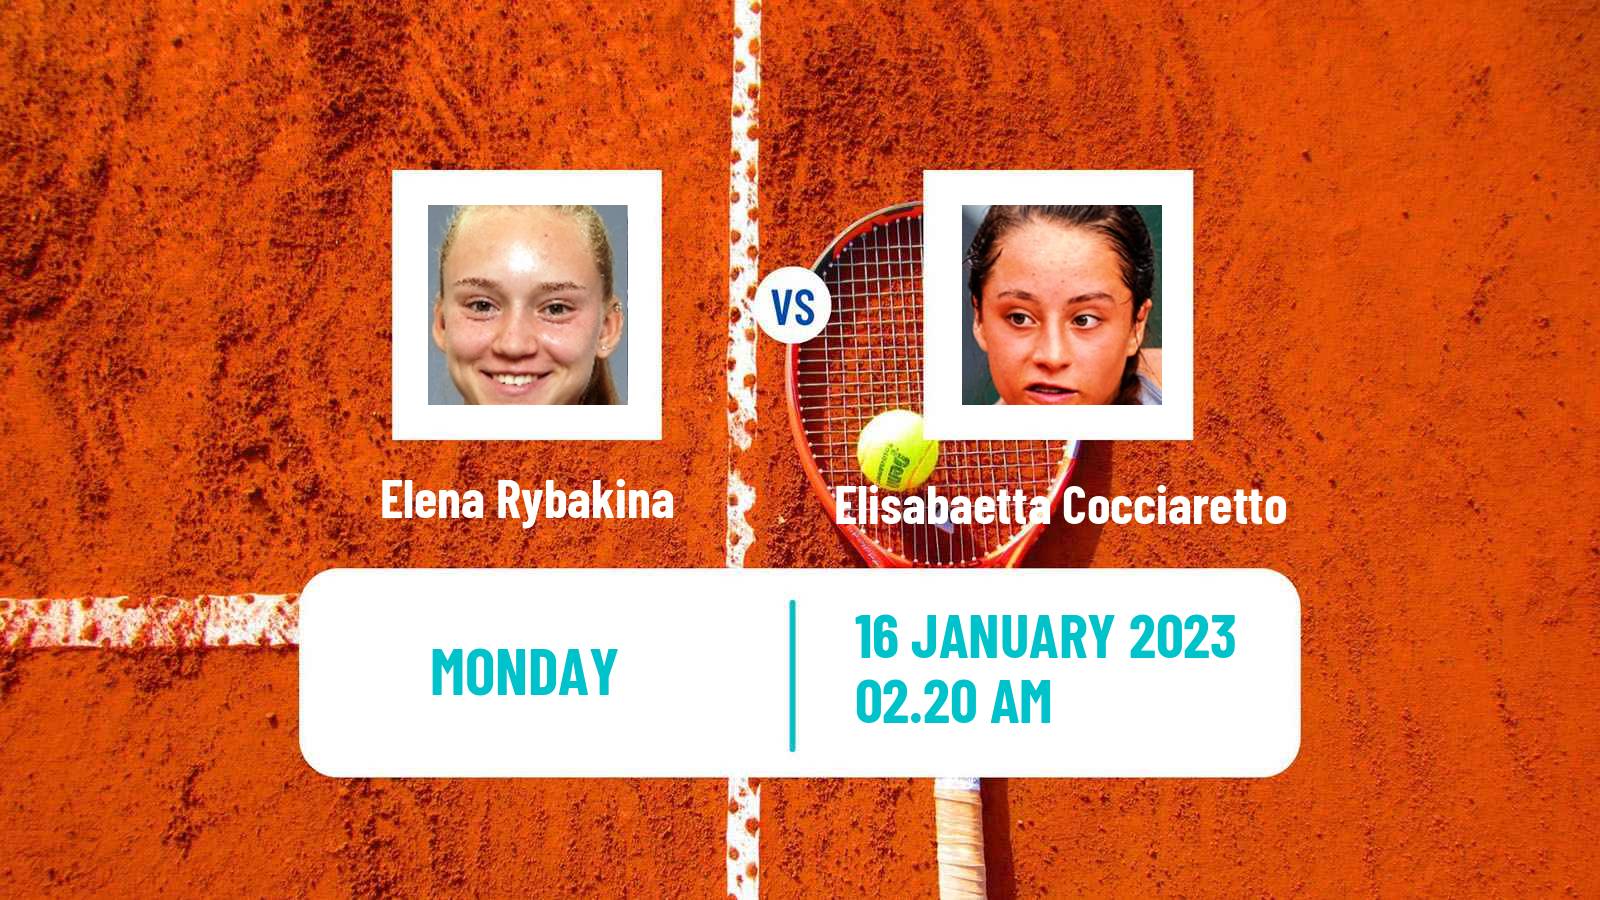 Tennis WTA Australian Open Elena Rybakina - Elisabaetta Cocciaretto